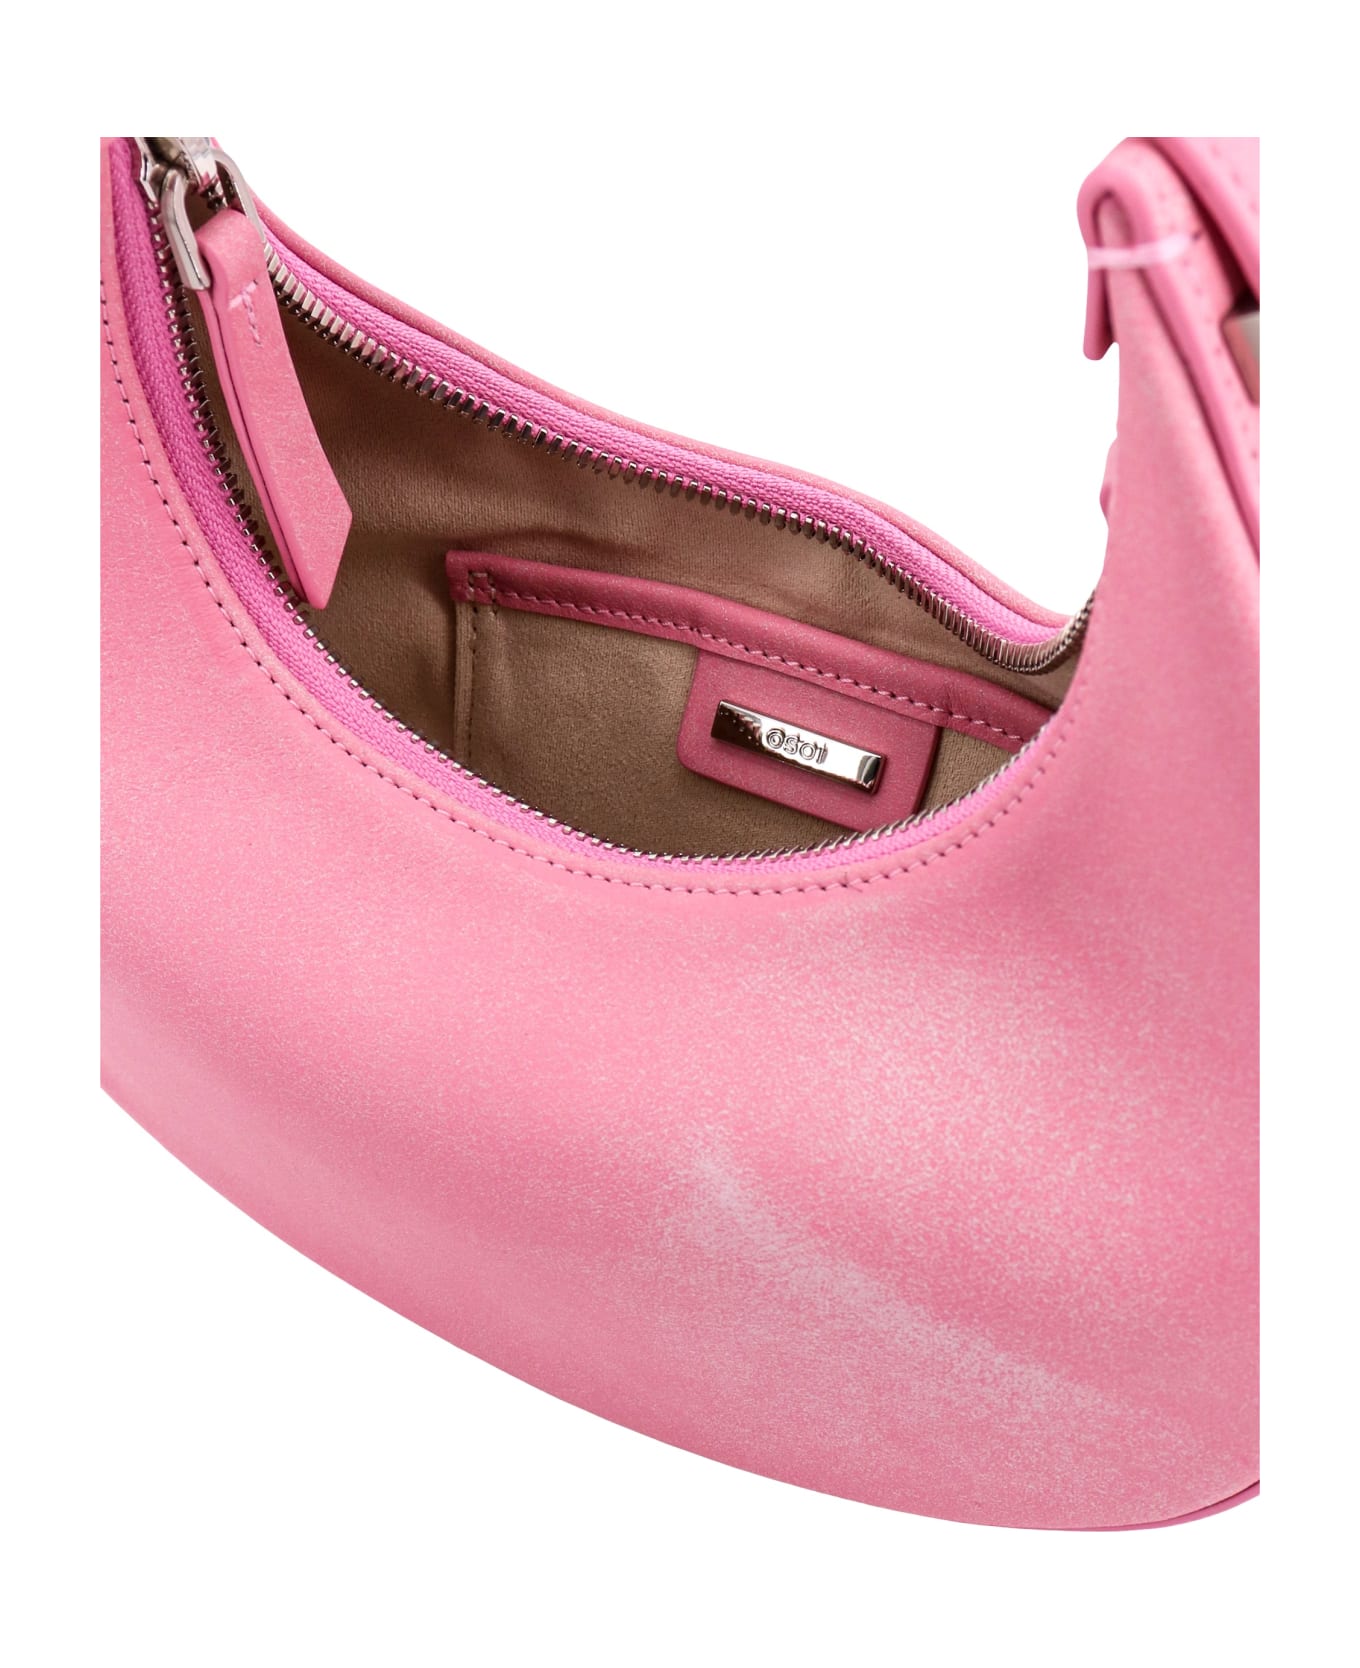 OSOI Toni Refined Bag - Pink